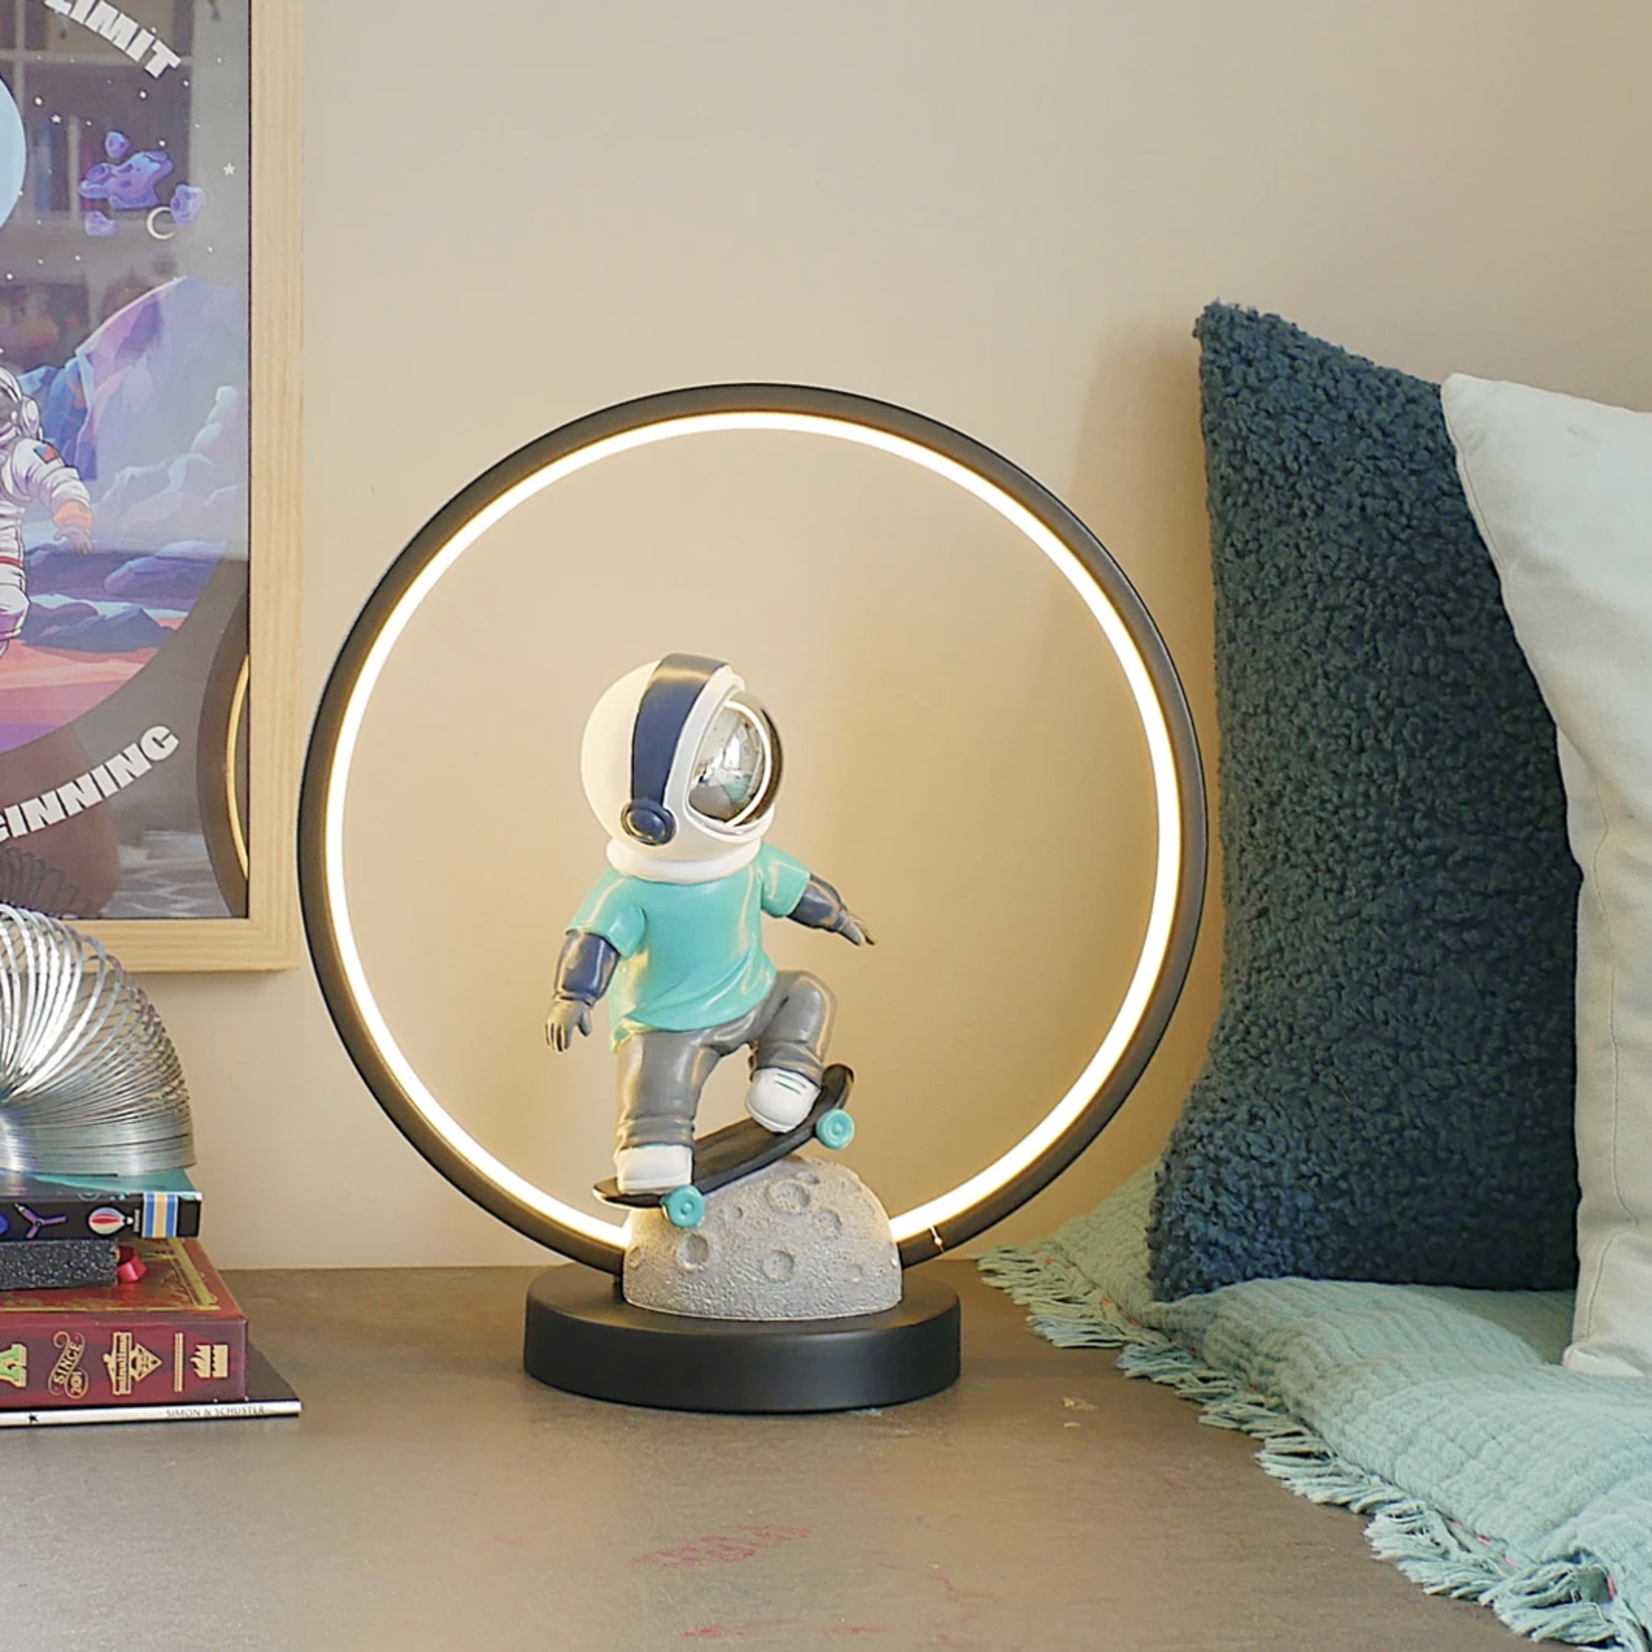 Steepletone Ultra Cool Astronaut Skateboarding figurine LED Ring Light - Blue and Silver